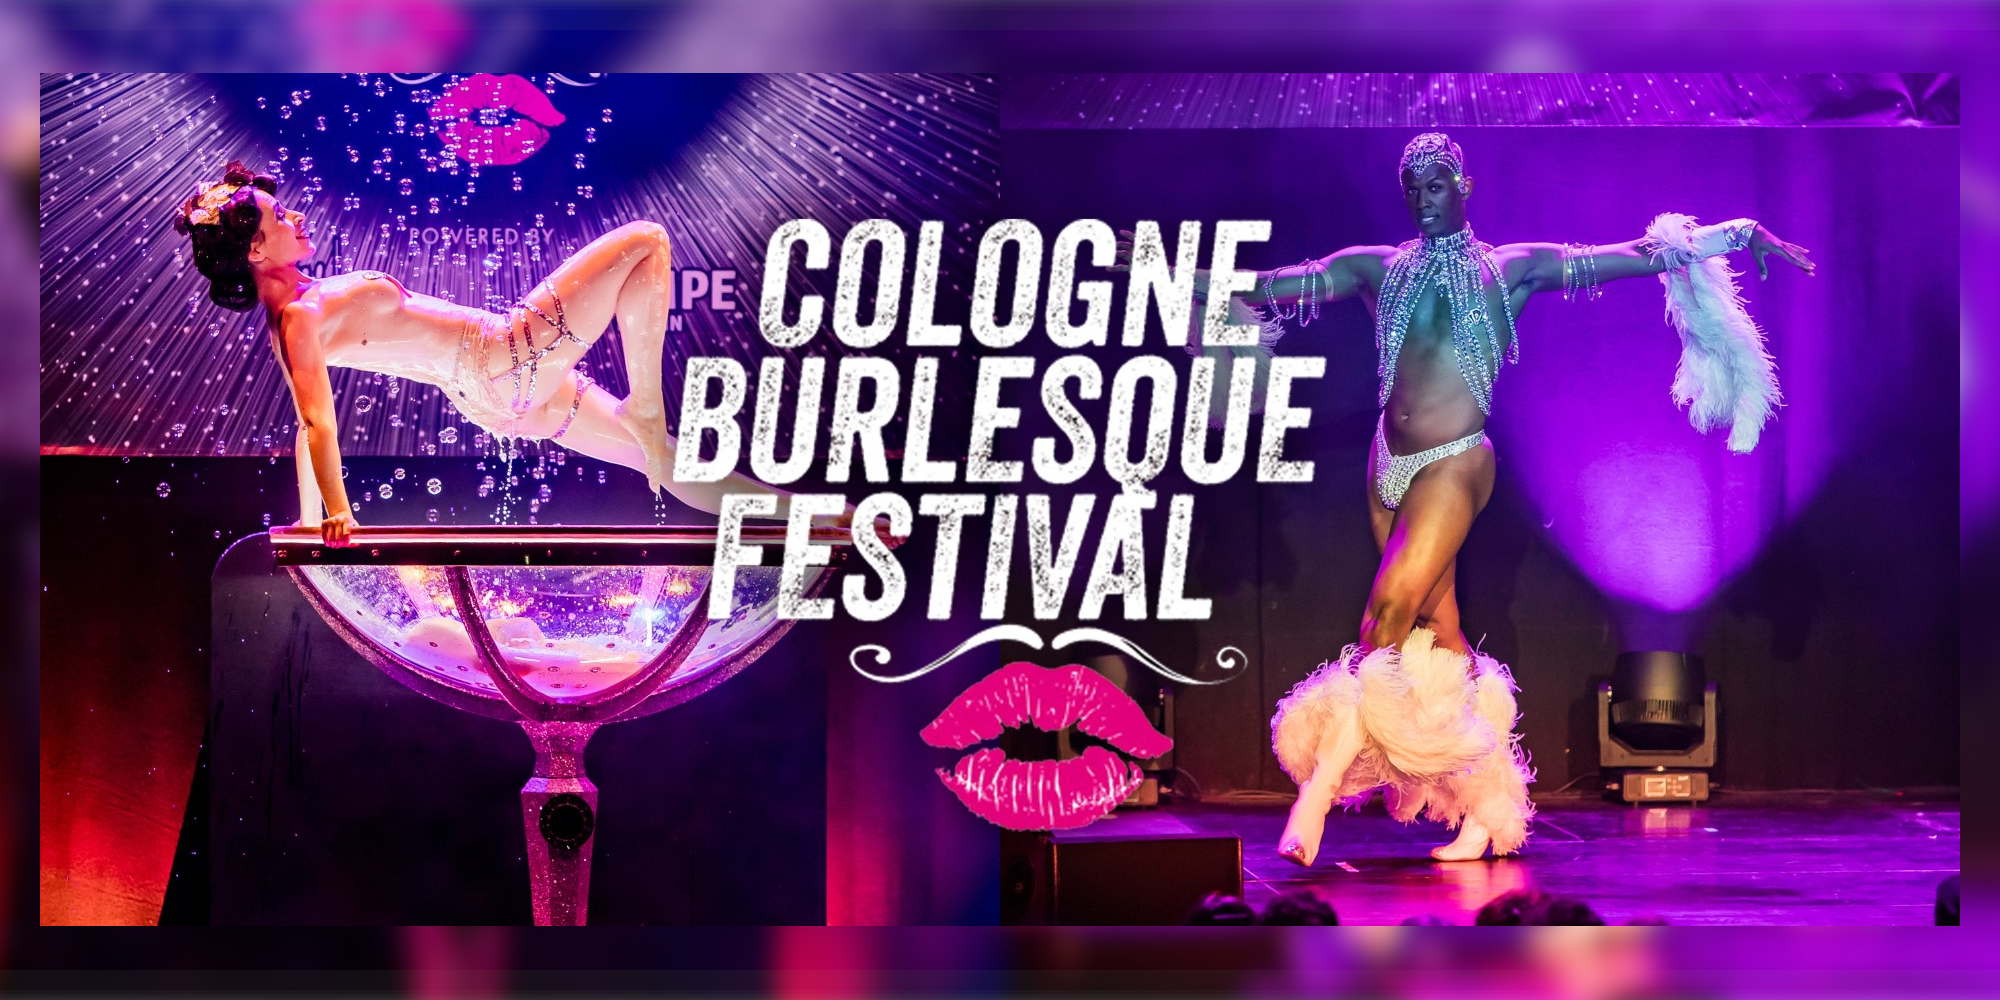 2. Cologne Burlesque Festival